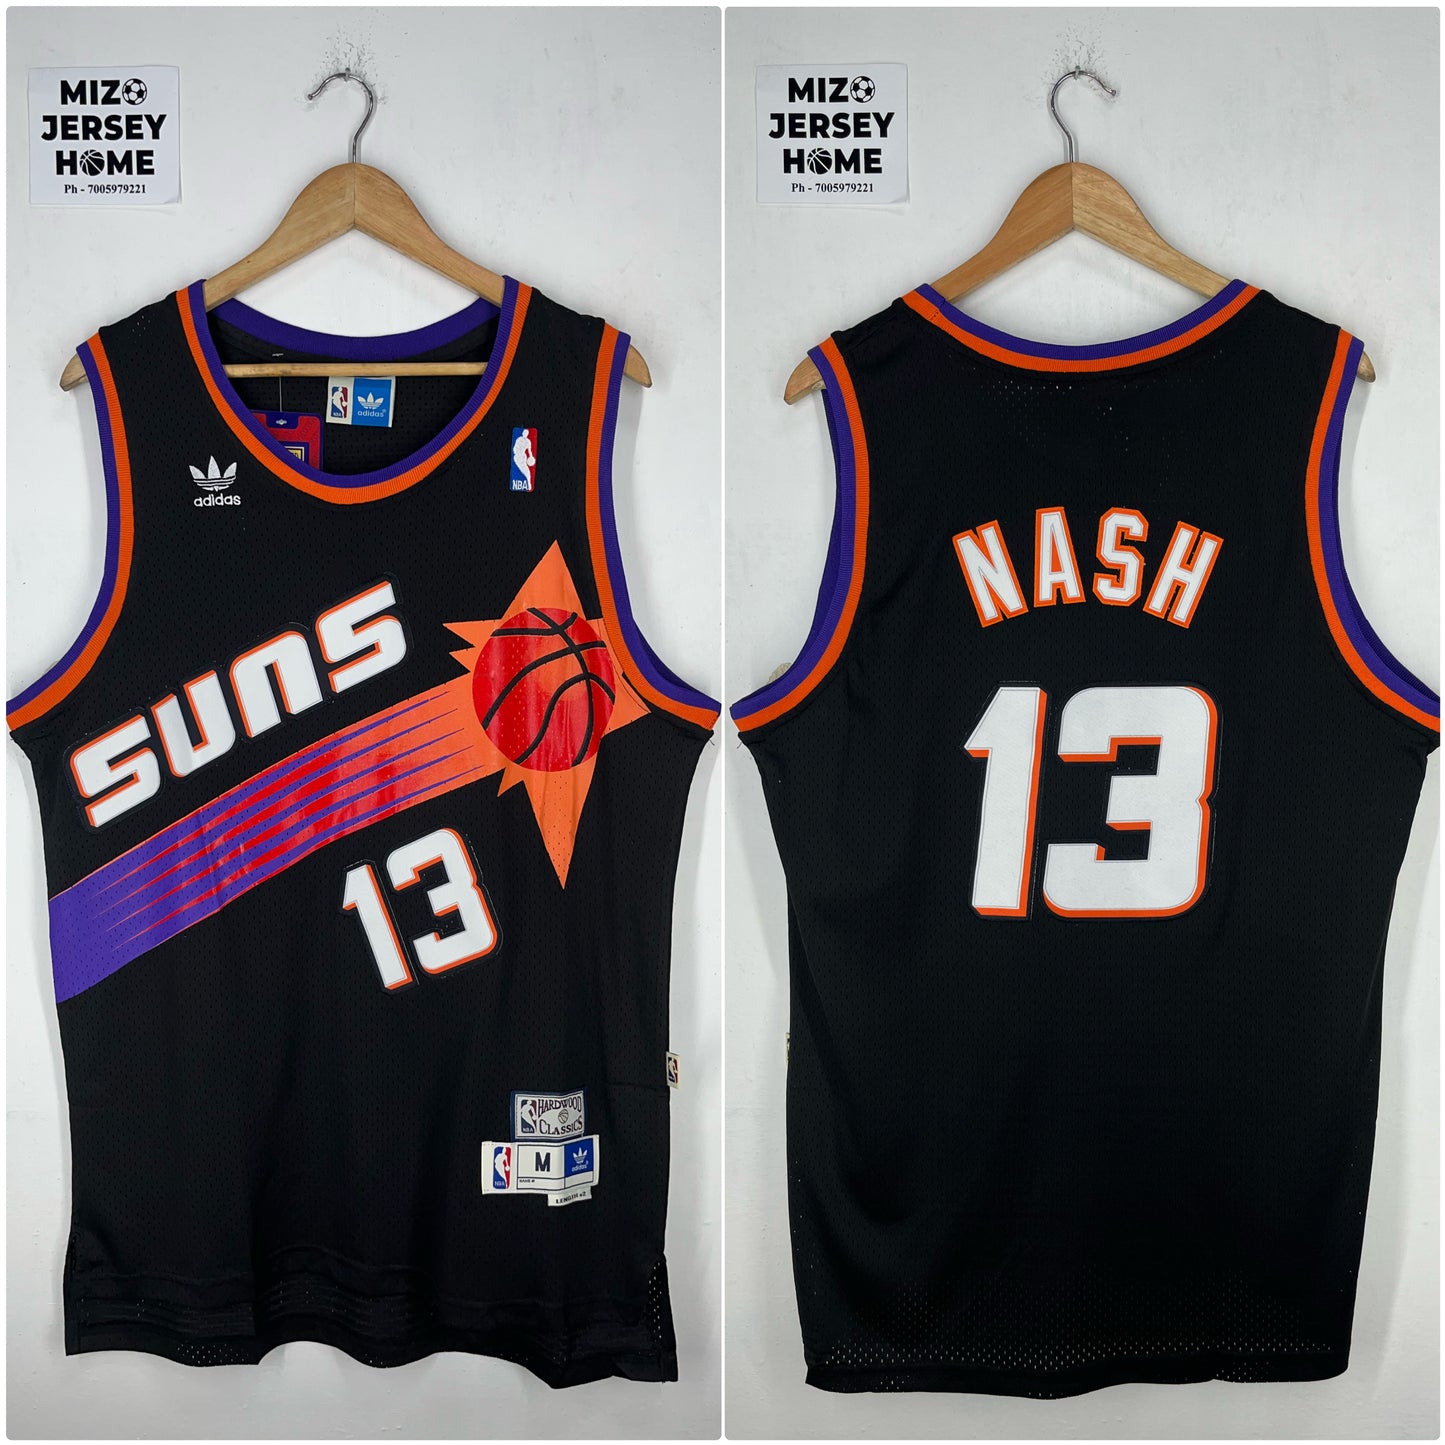 NASH 13 Black Phoenix Suns NBA Jersey